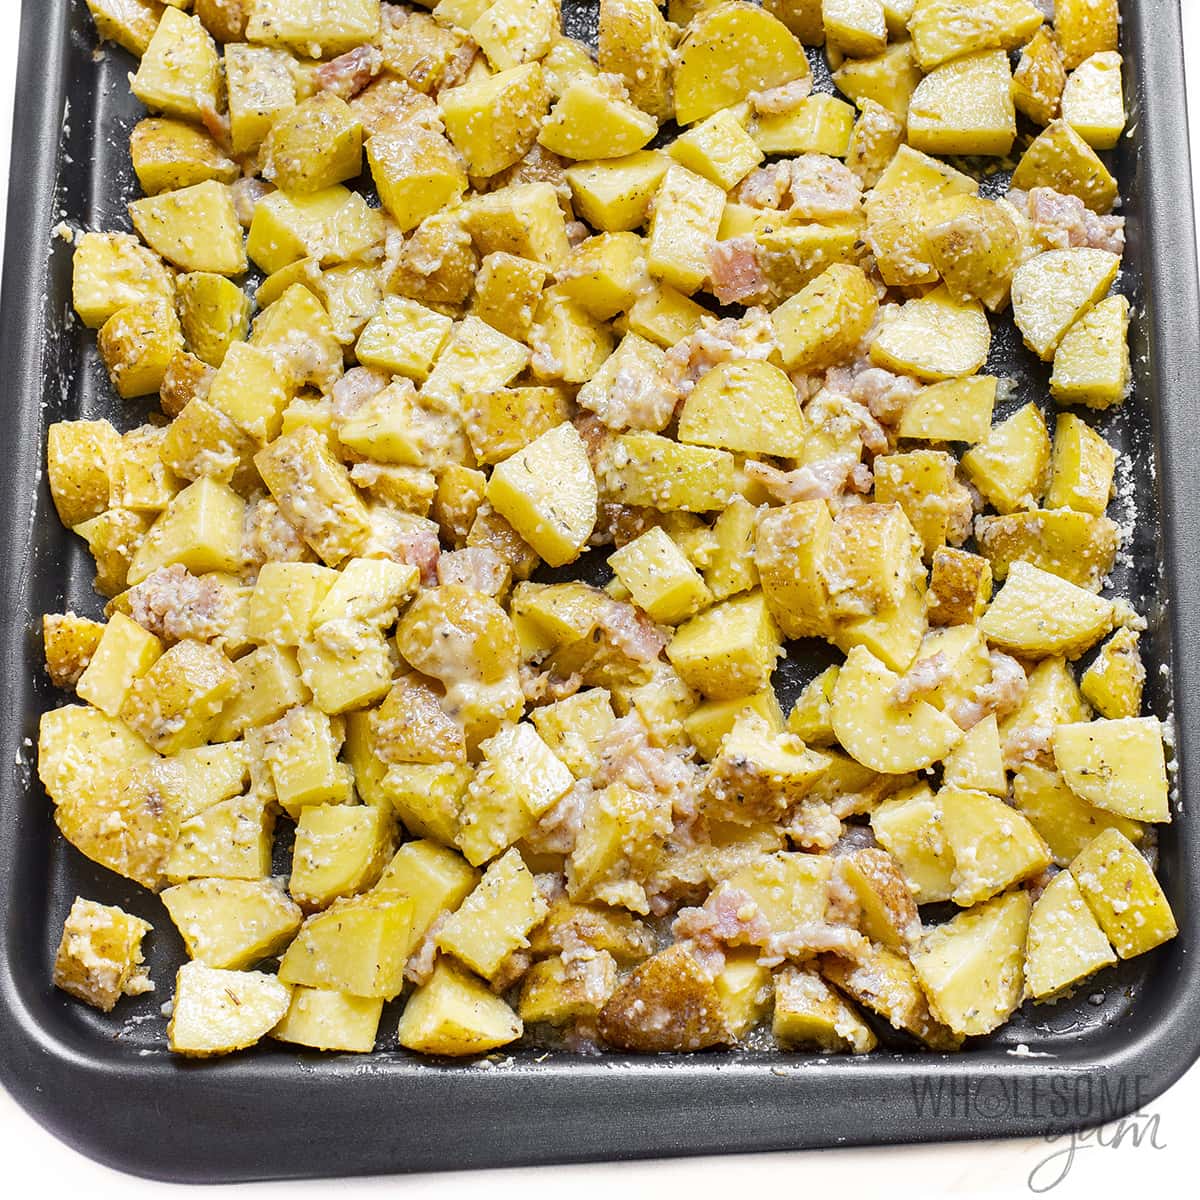 Potatoes with seasonings on sheet pan.